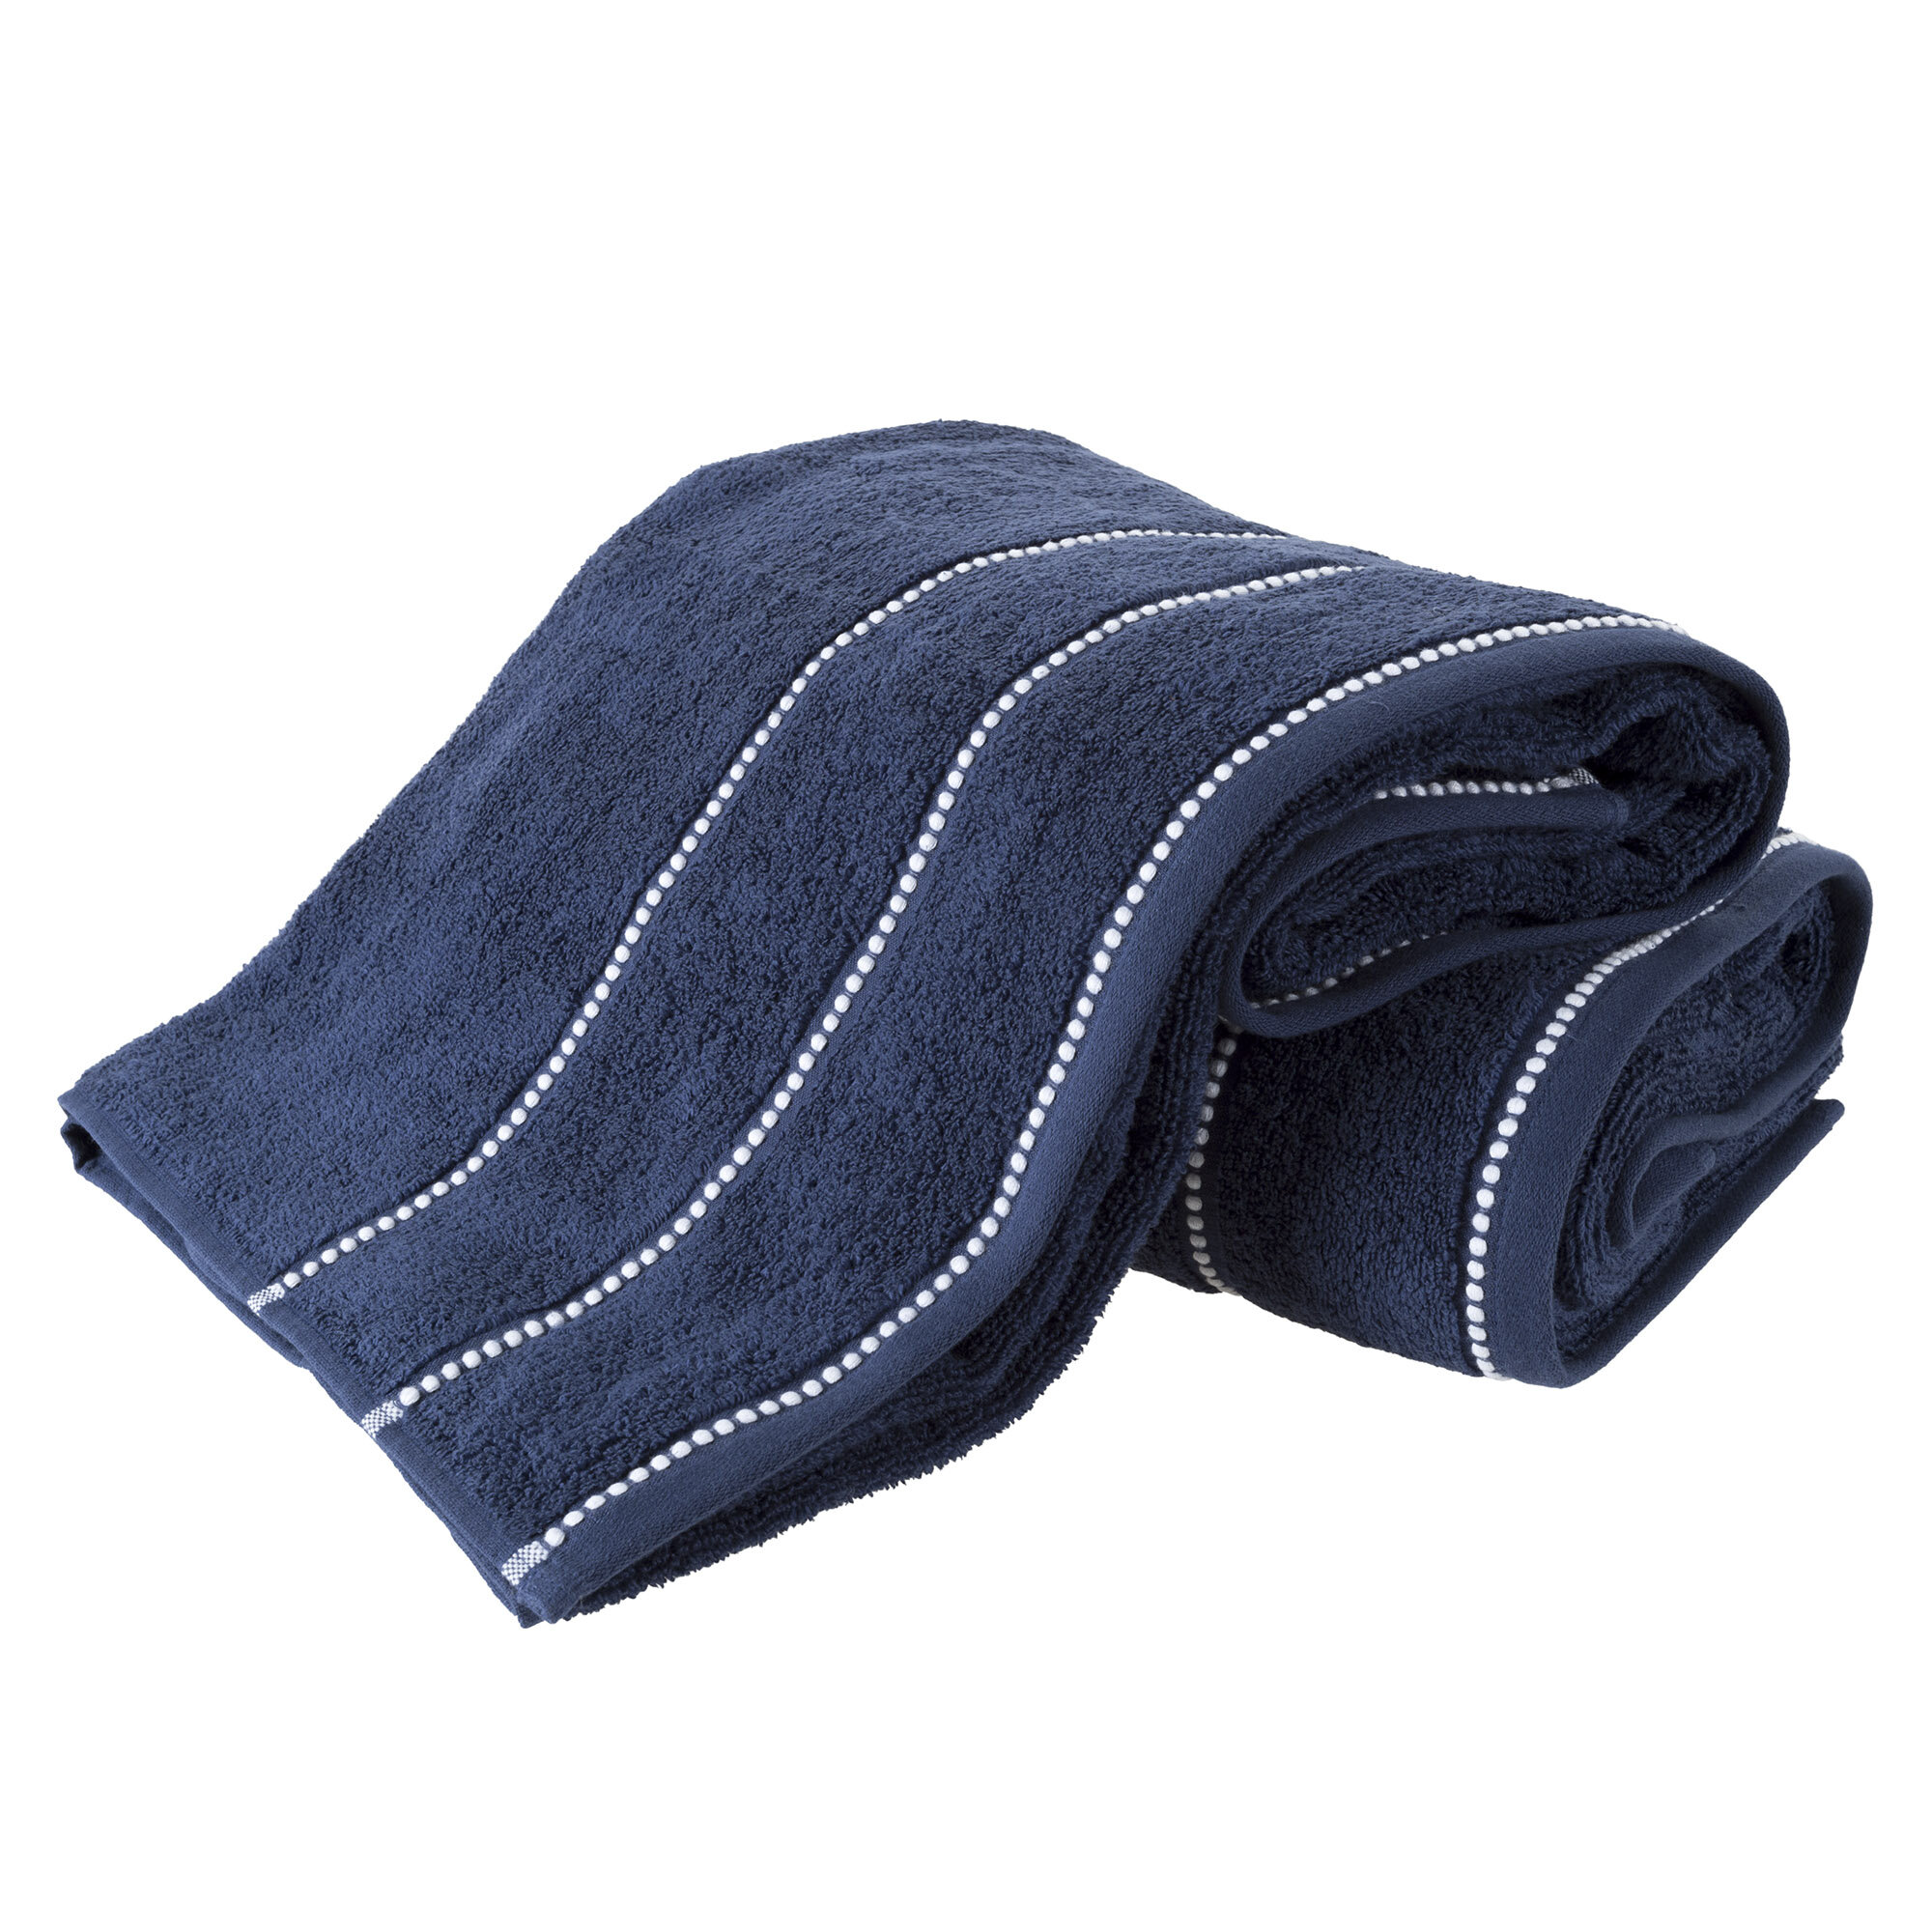 Premium 6 Pieces Towel Set - 6 exclusive Washcloths Towels|Fingertip Towels  13 X 13 - Color: Sand 100% Cotton |Machine Washable high Absorbency | by